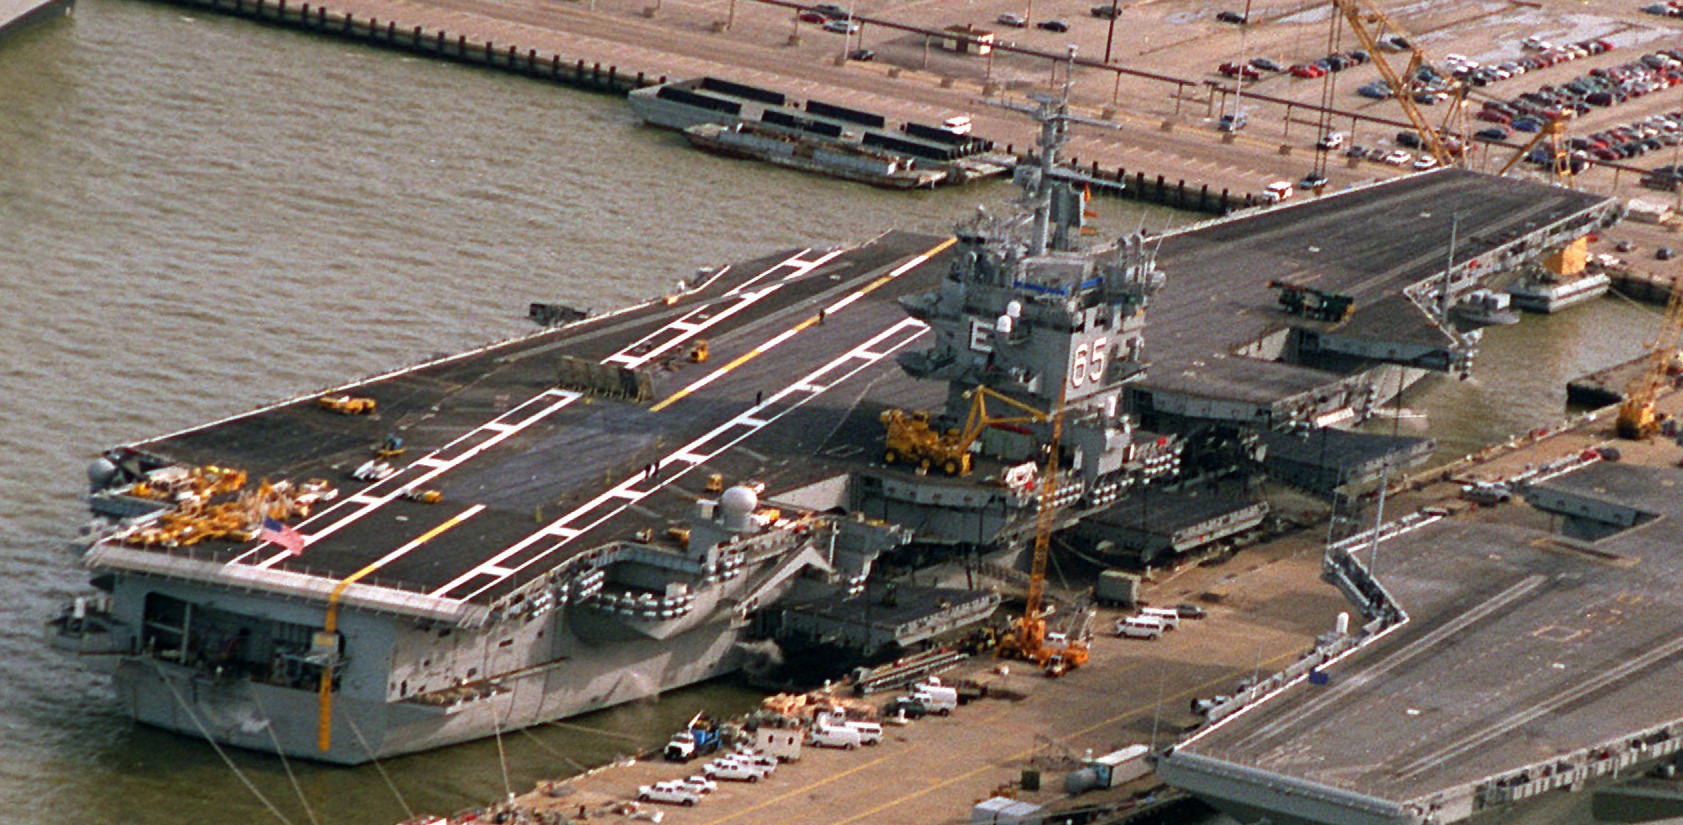 cvn-65 uss enterprise aircraft carrier us navy nas norfolk virginia 1996 87